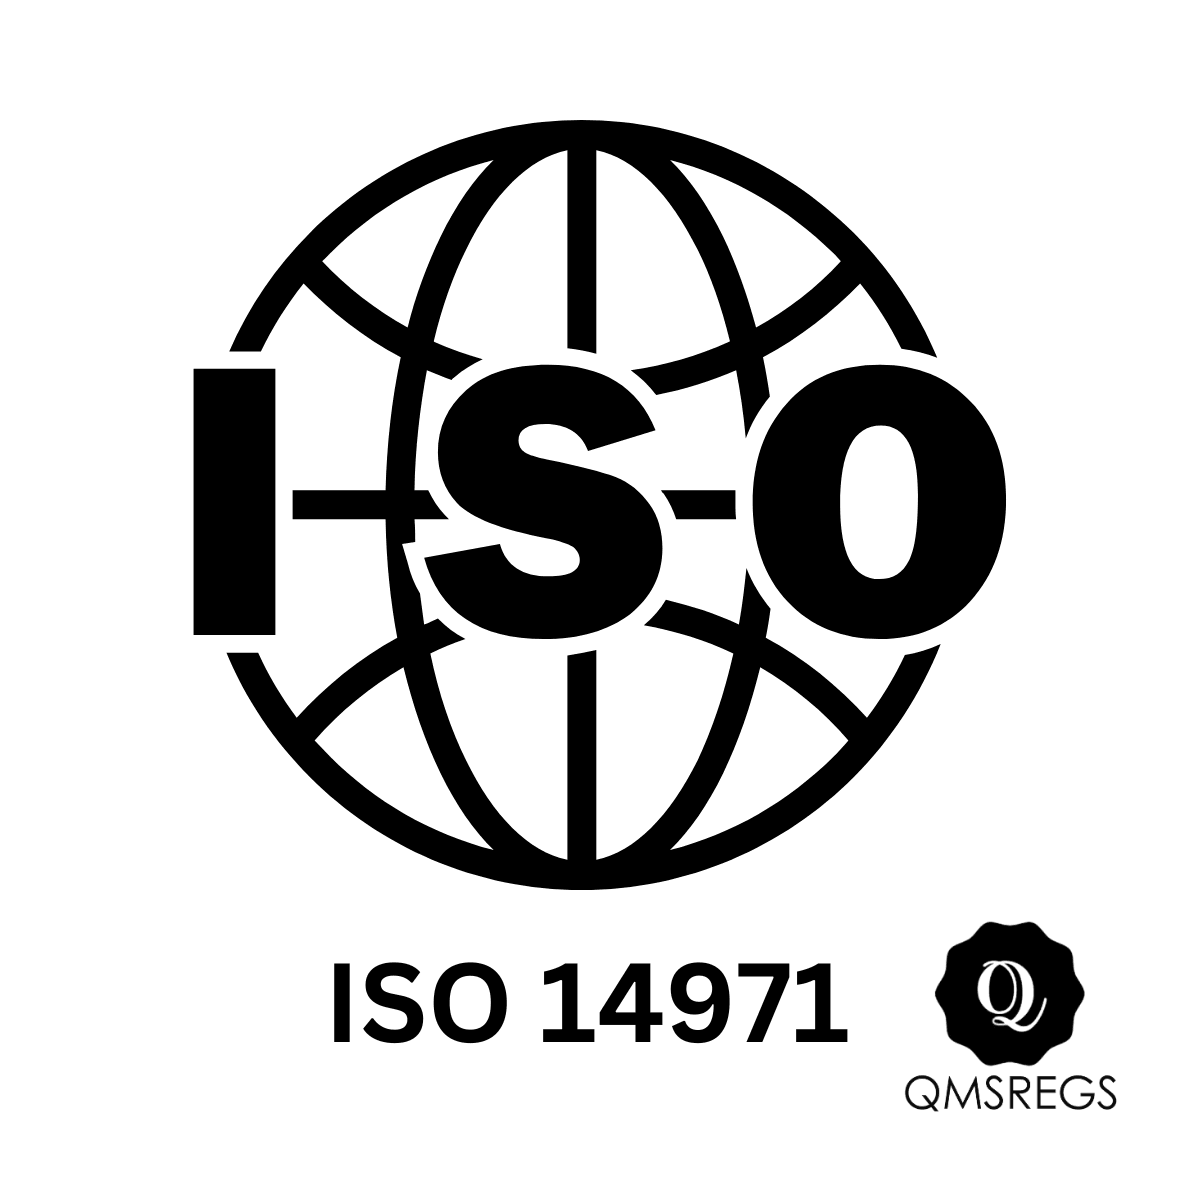 ISO 14971 Risk Management